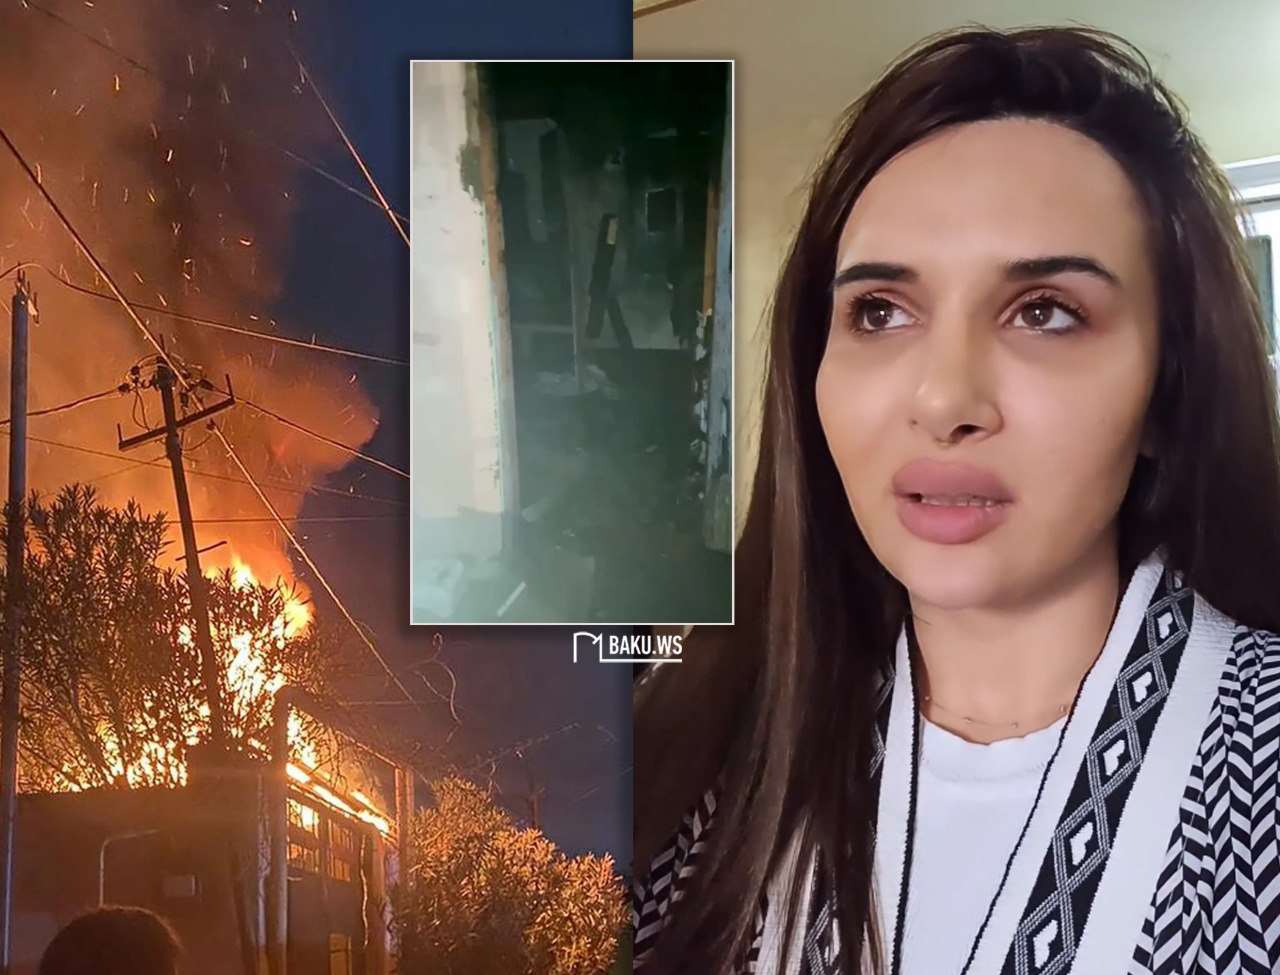 Azərbaycanda aparıcının evini yandırıblar?